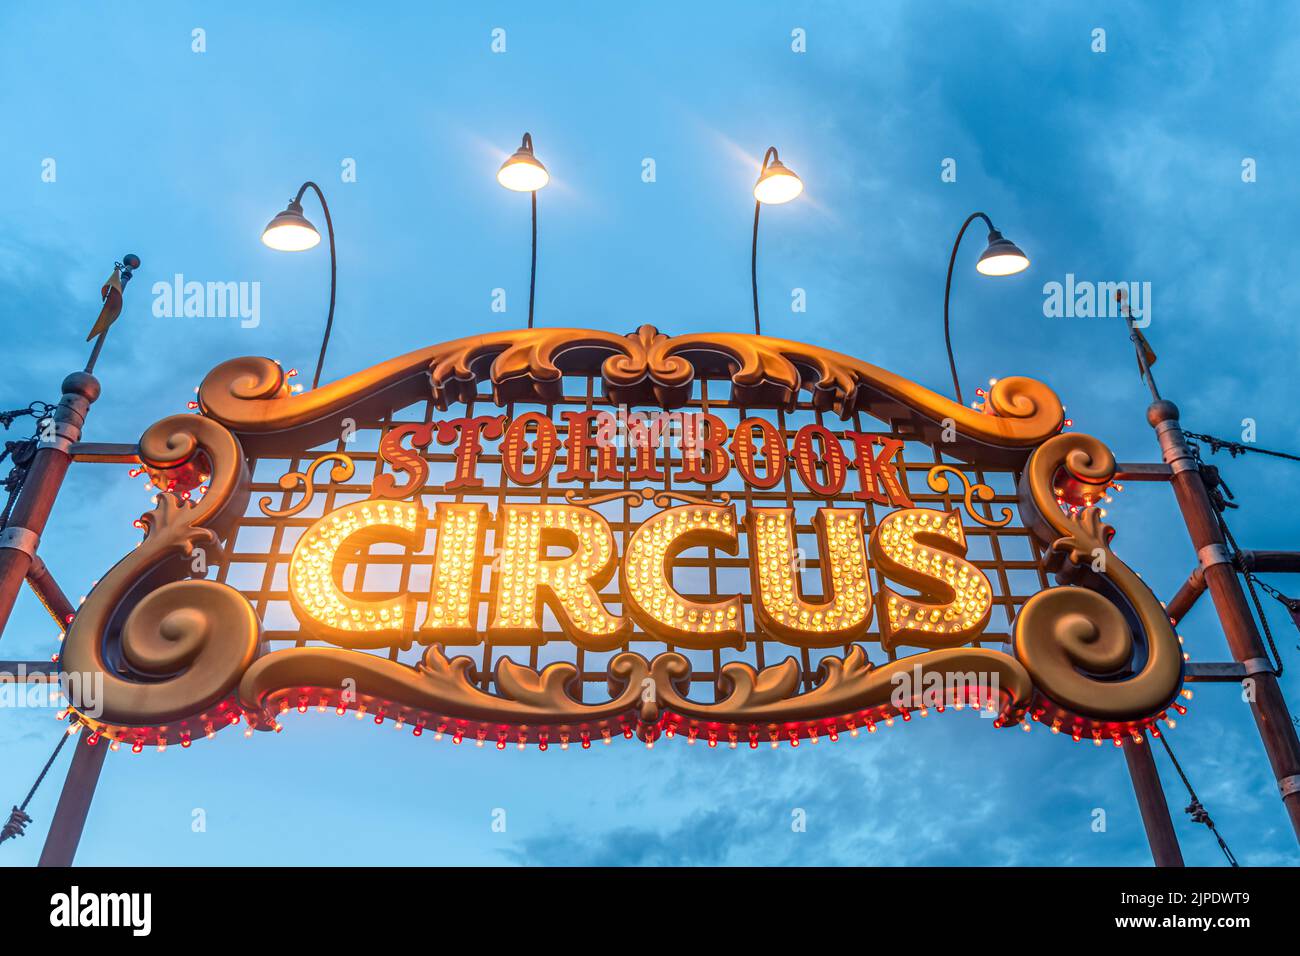 Storybook Circus sign illuminated at night Stock Photo